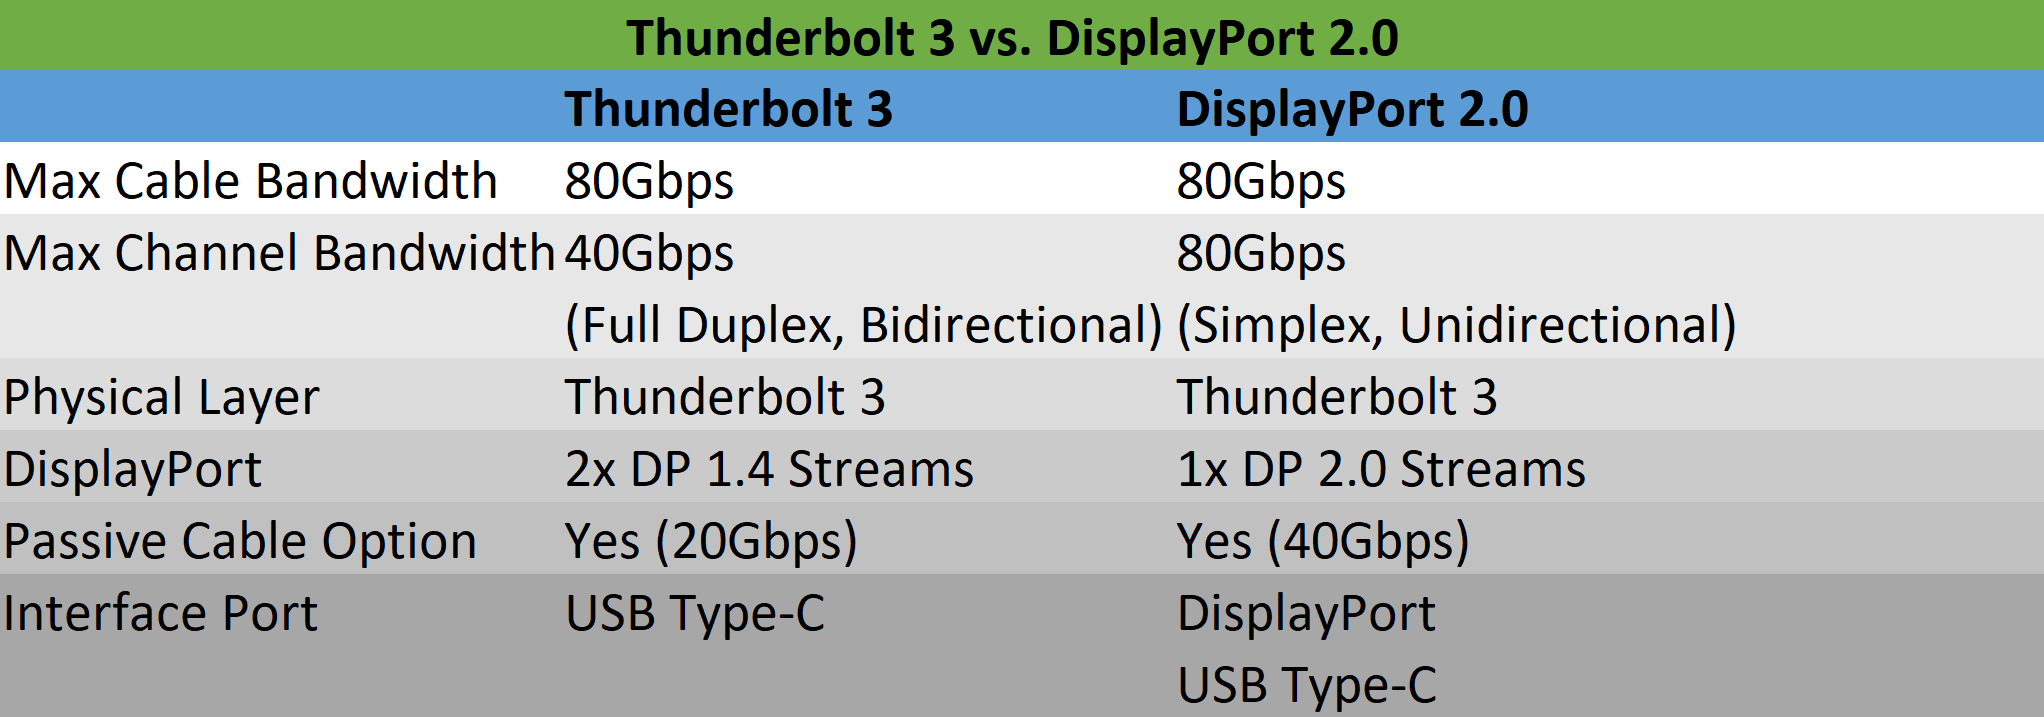 thunderbolt 3 diplayport 2.0 comparison